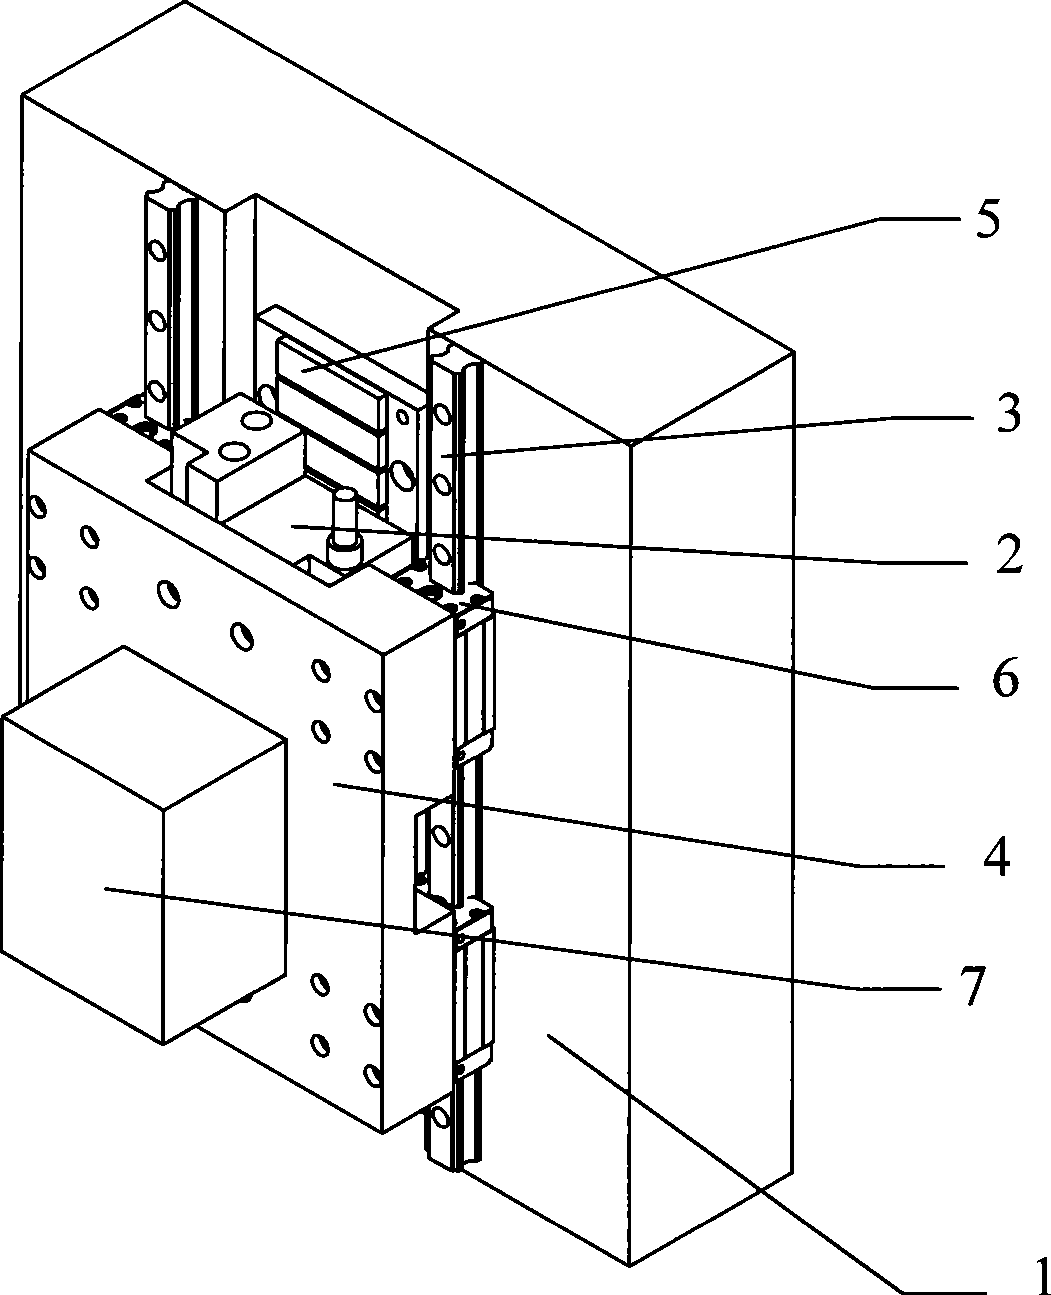 Platform for driving straight line motor of PCB piercing machine